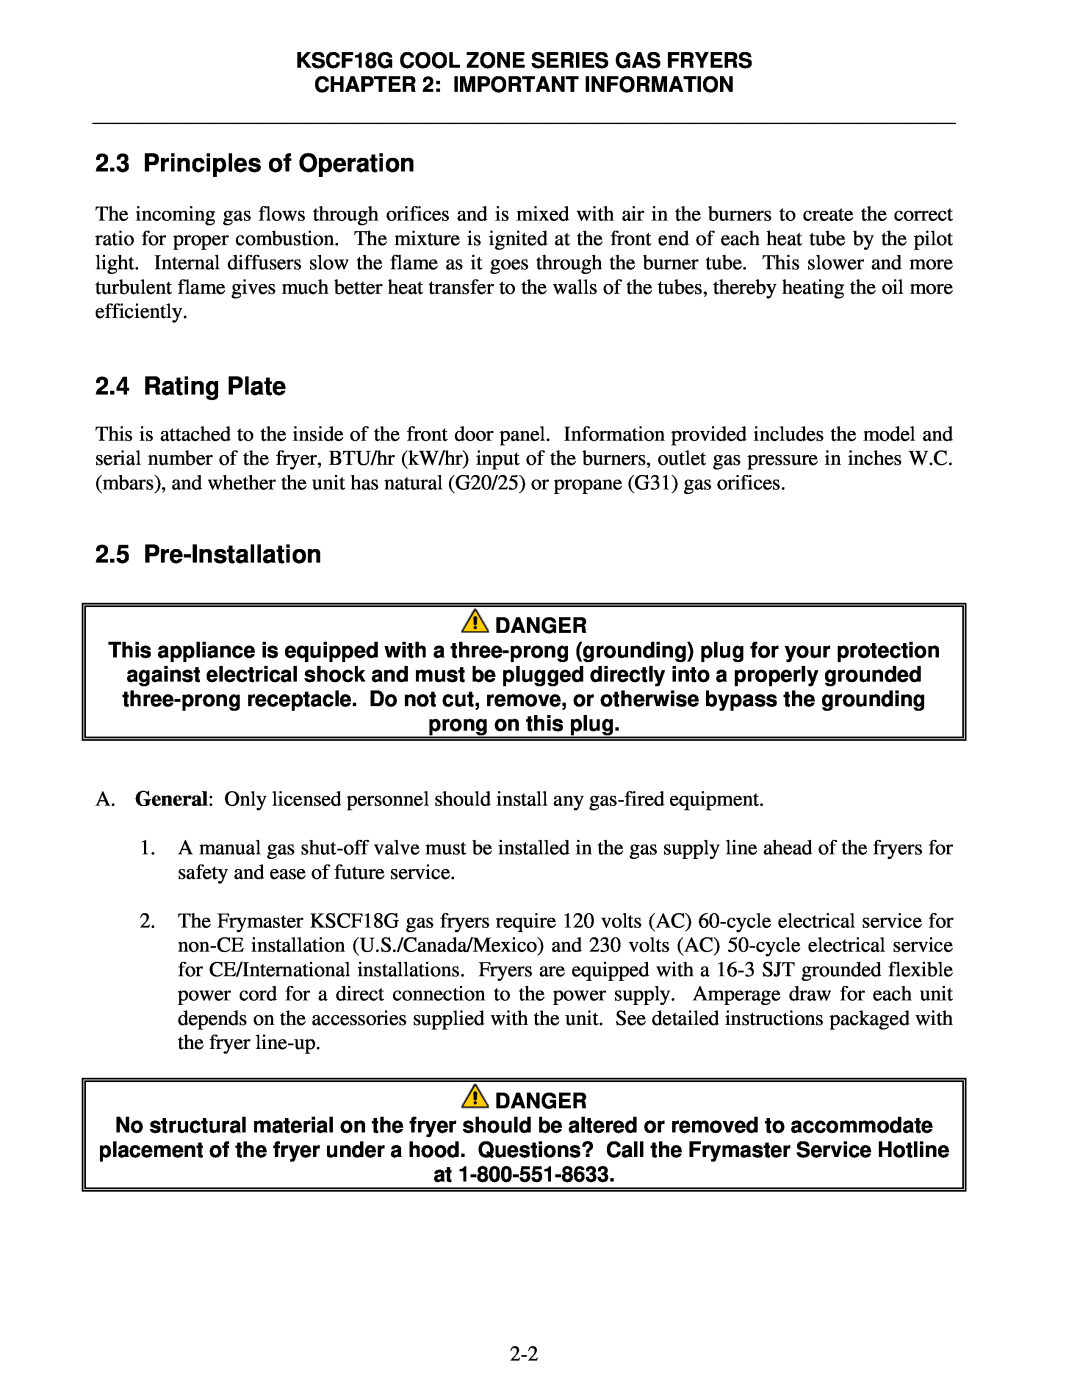 Frymaster KSCF18G manual Principles of Operation, Rating Plate, Pre-Installation, Important Information, Danger 